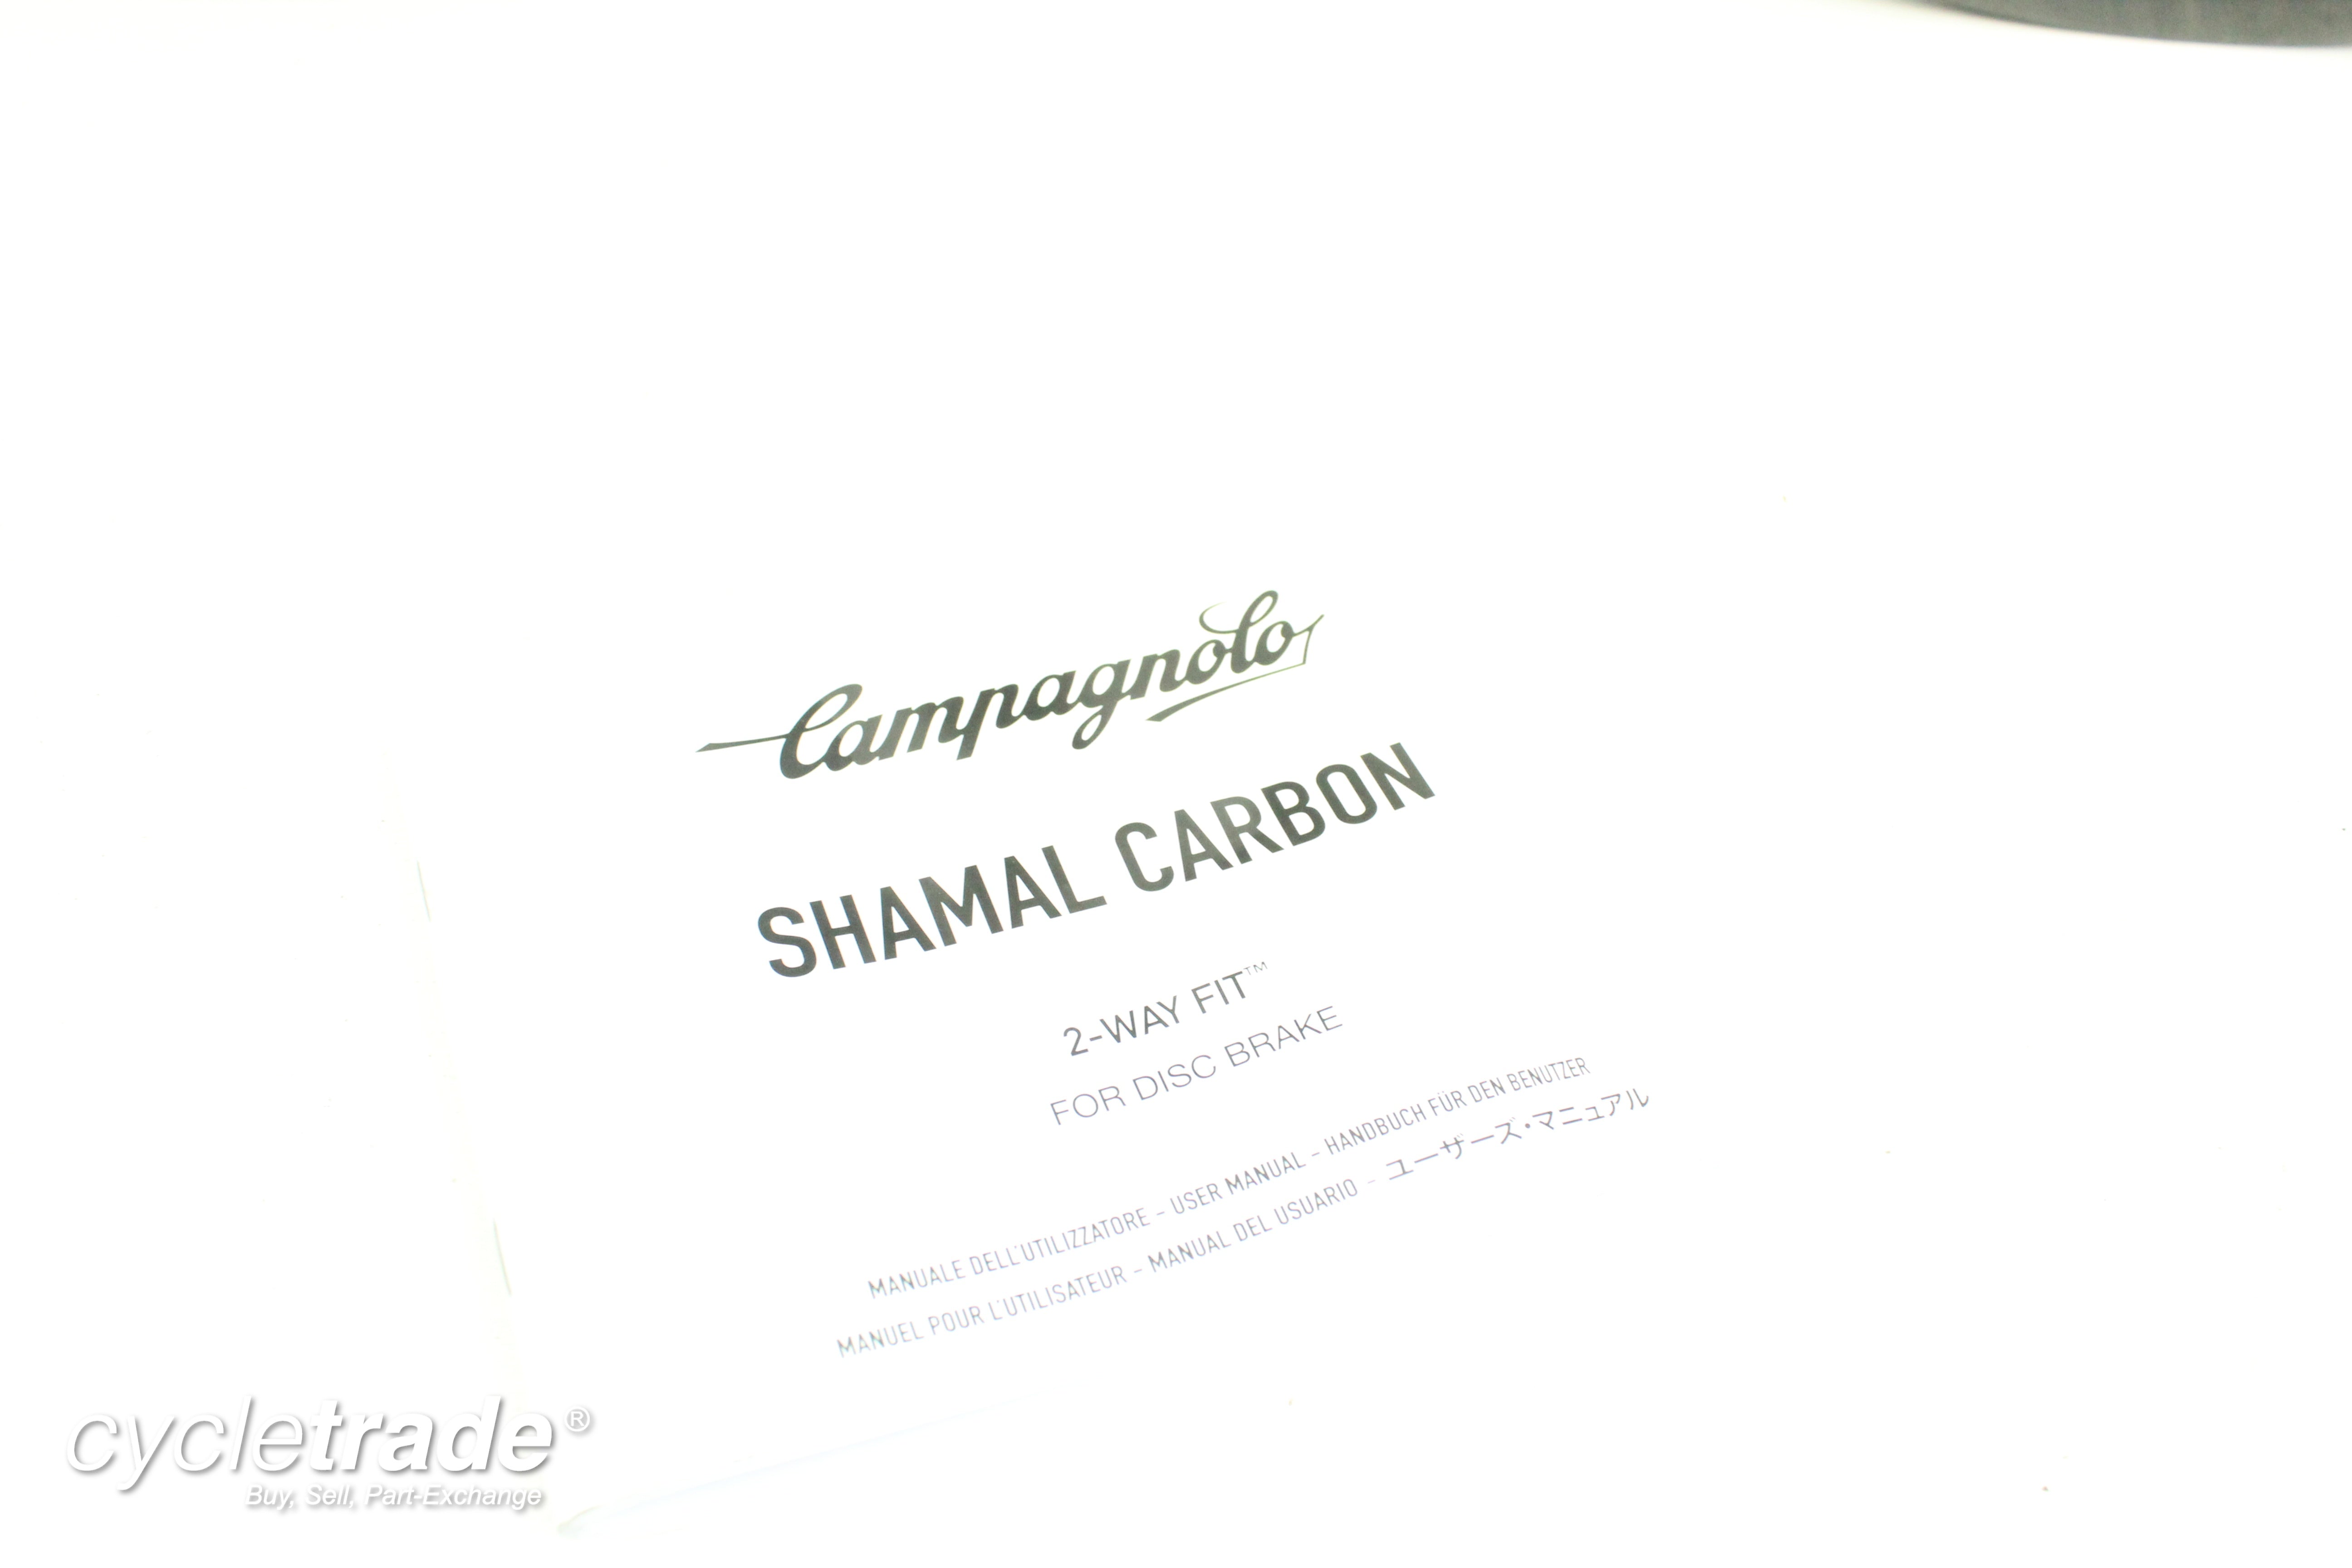 700c Disc Wheelset- Campagnolo Shamal Carbon C21 NSW Freehub - NEW